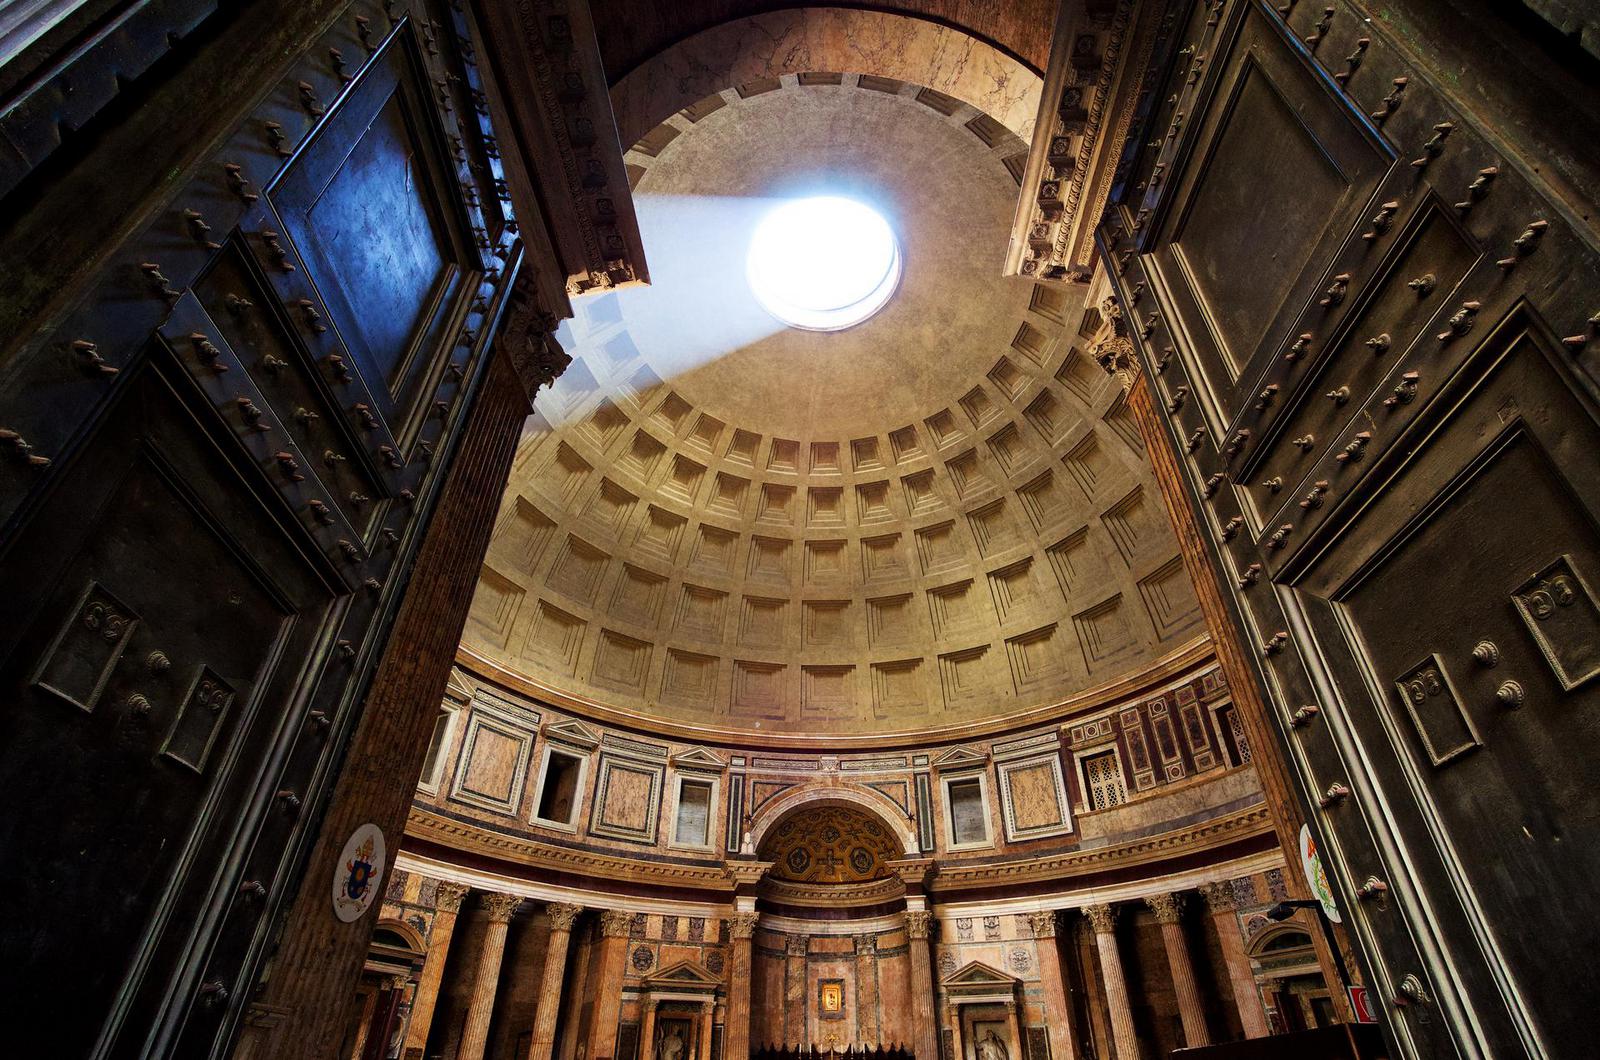 Through the Giant Bronze Doors into the Pantheon.